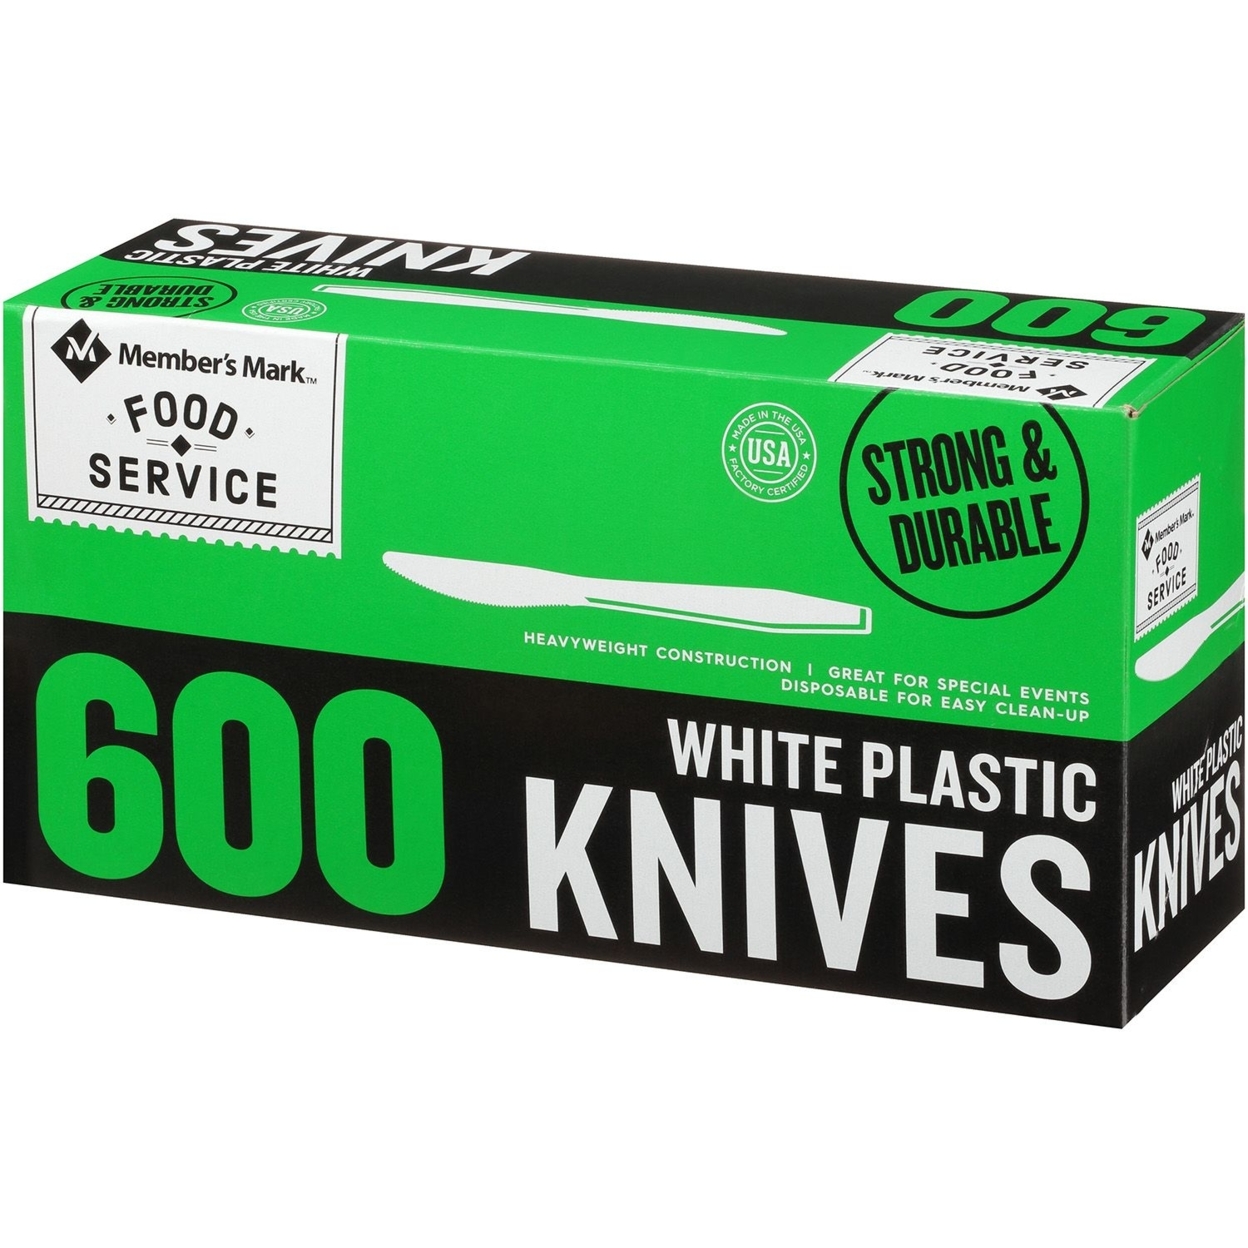 Member's Mark Plastic Knives, Heavyweight, White (600 Count)